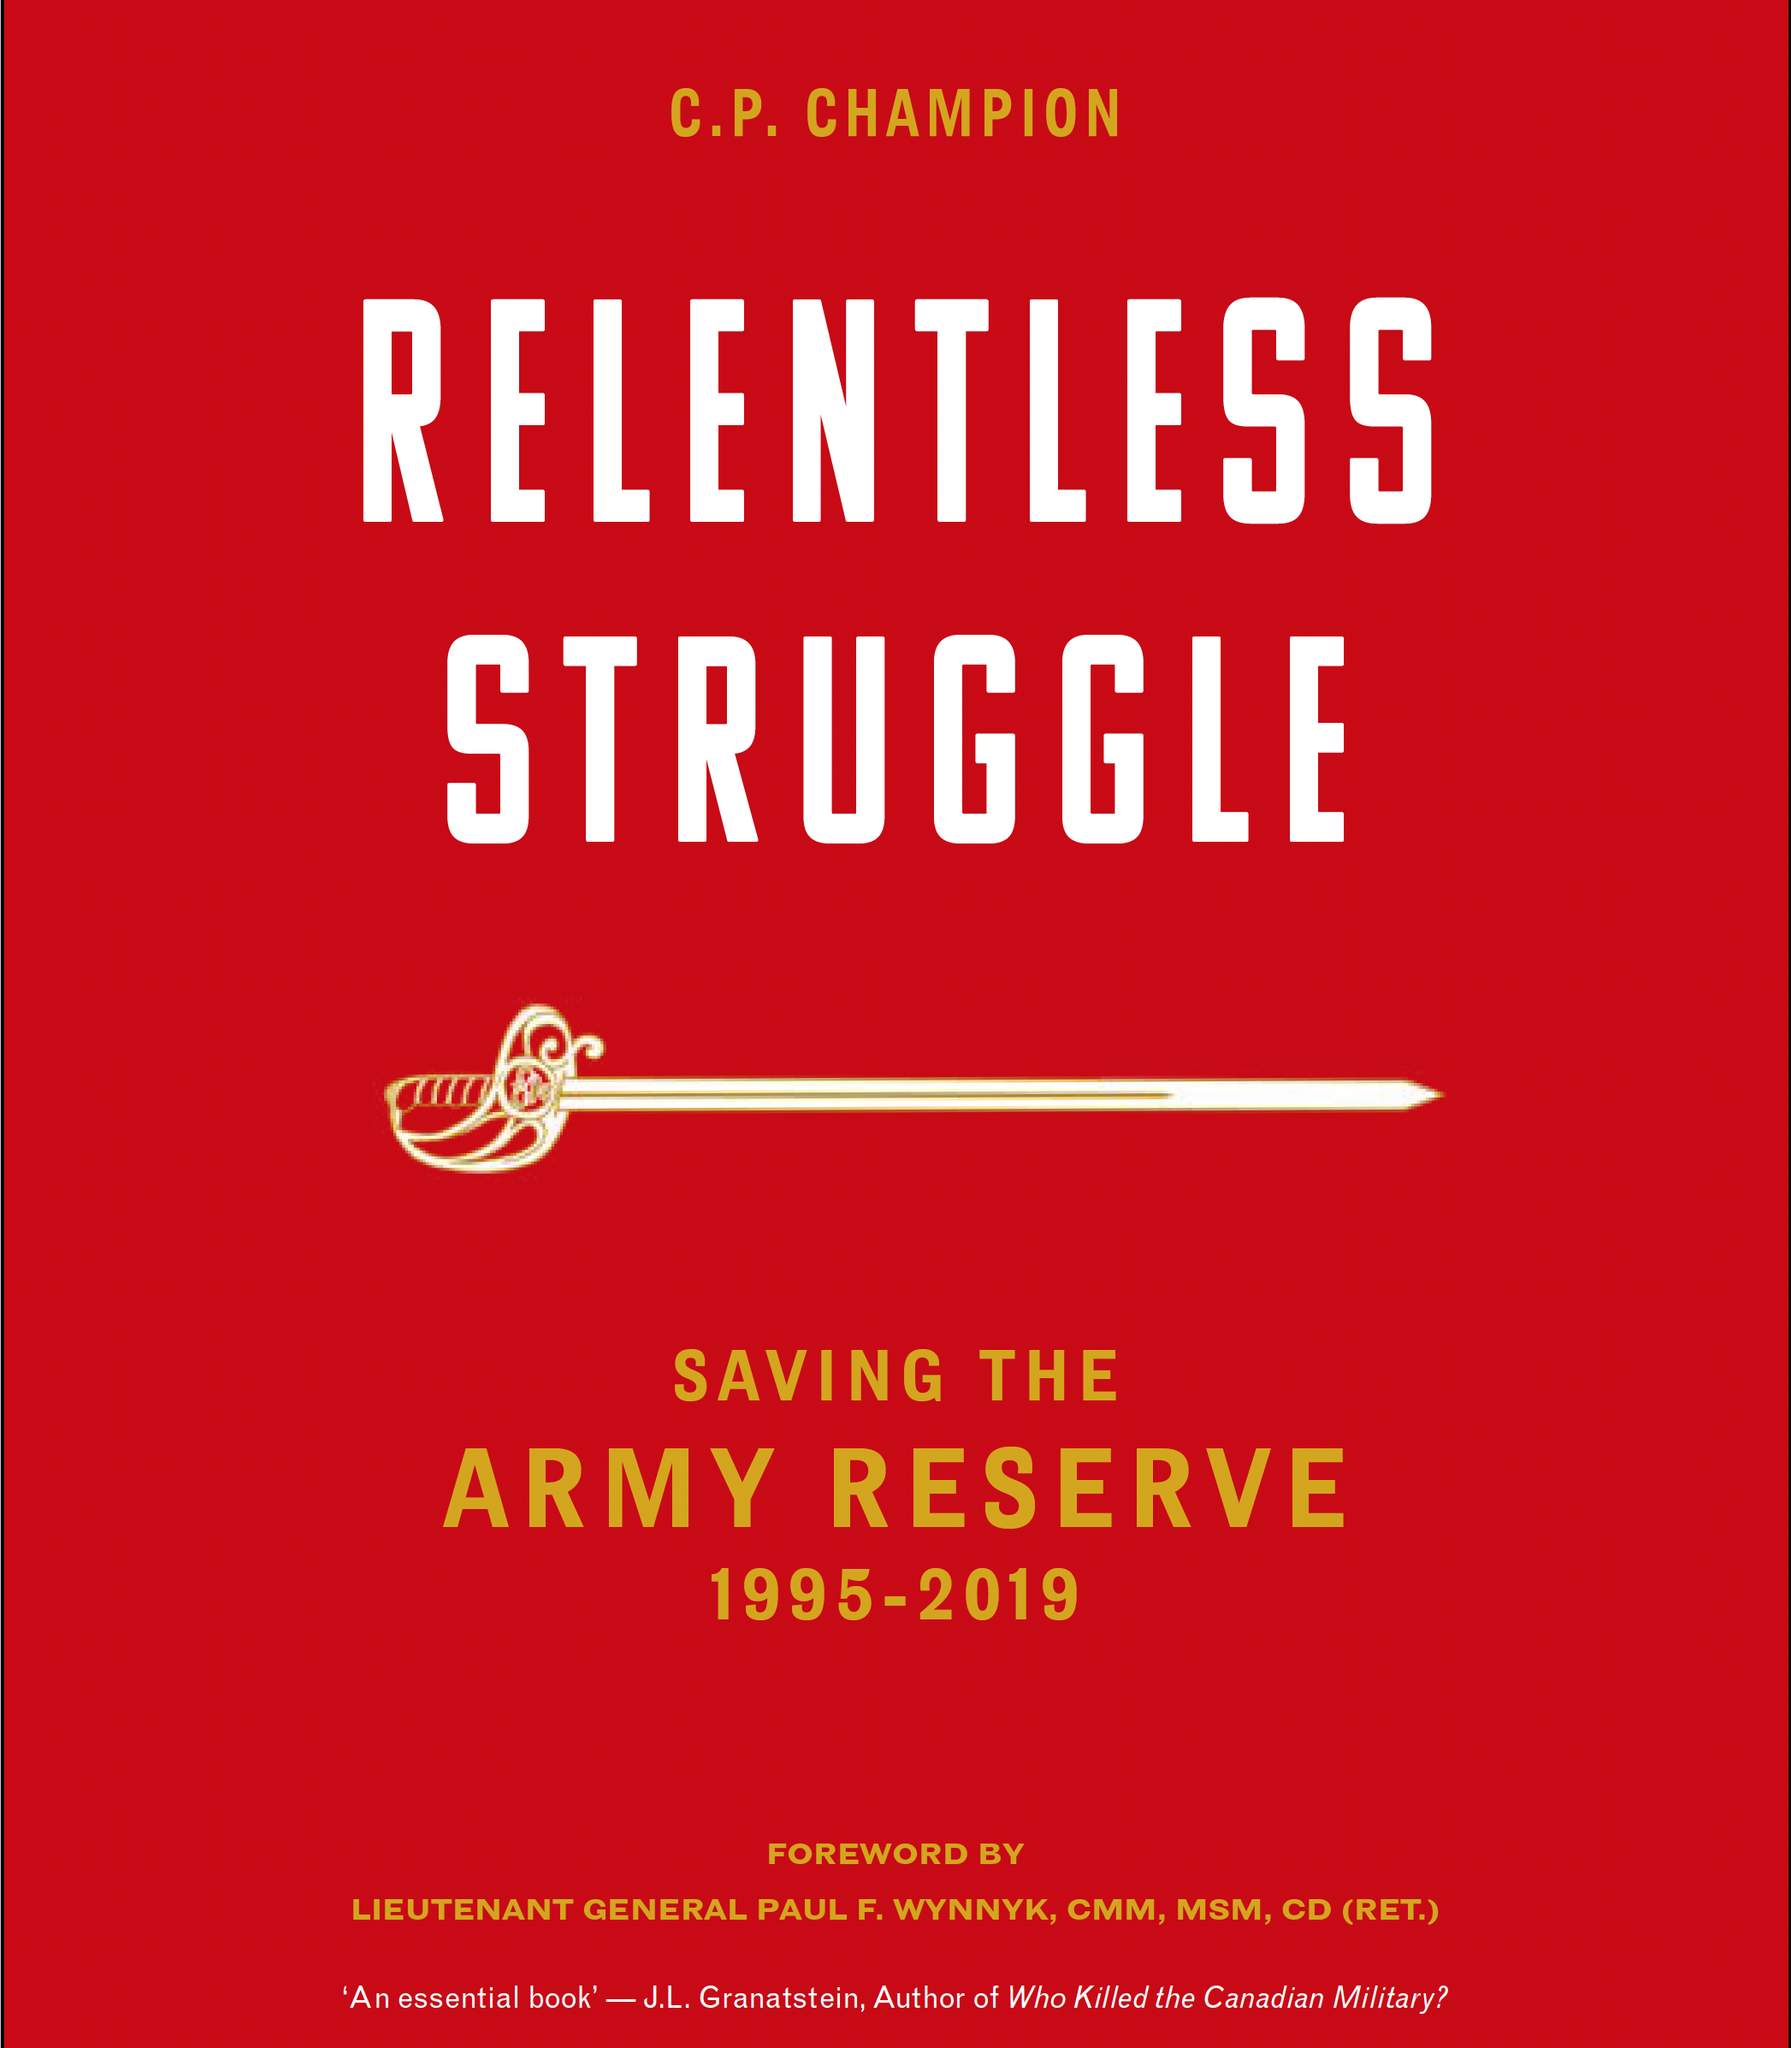 Relentless Struggle - .pdf version